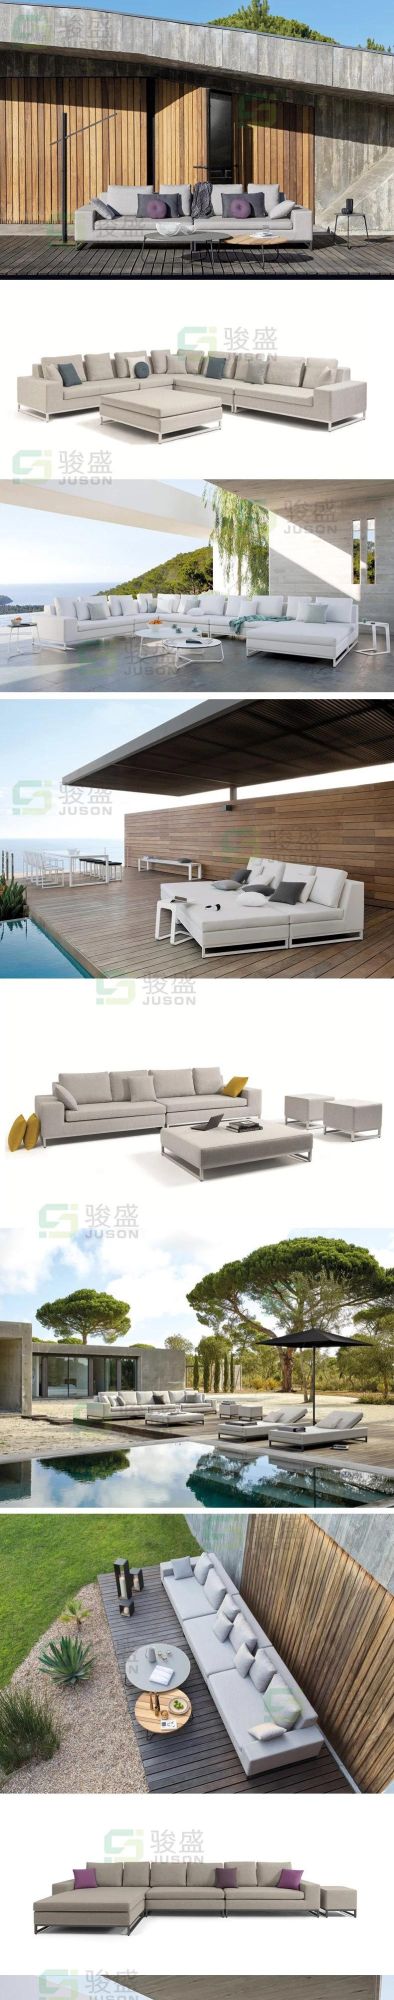 Hot Sale Garden Set European Style Modern Patio Leisure Chaise Lounge Chair Hotel Outdoor Sofa Furniture